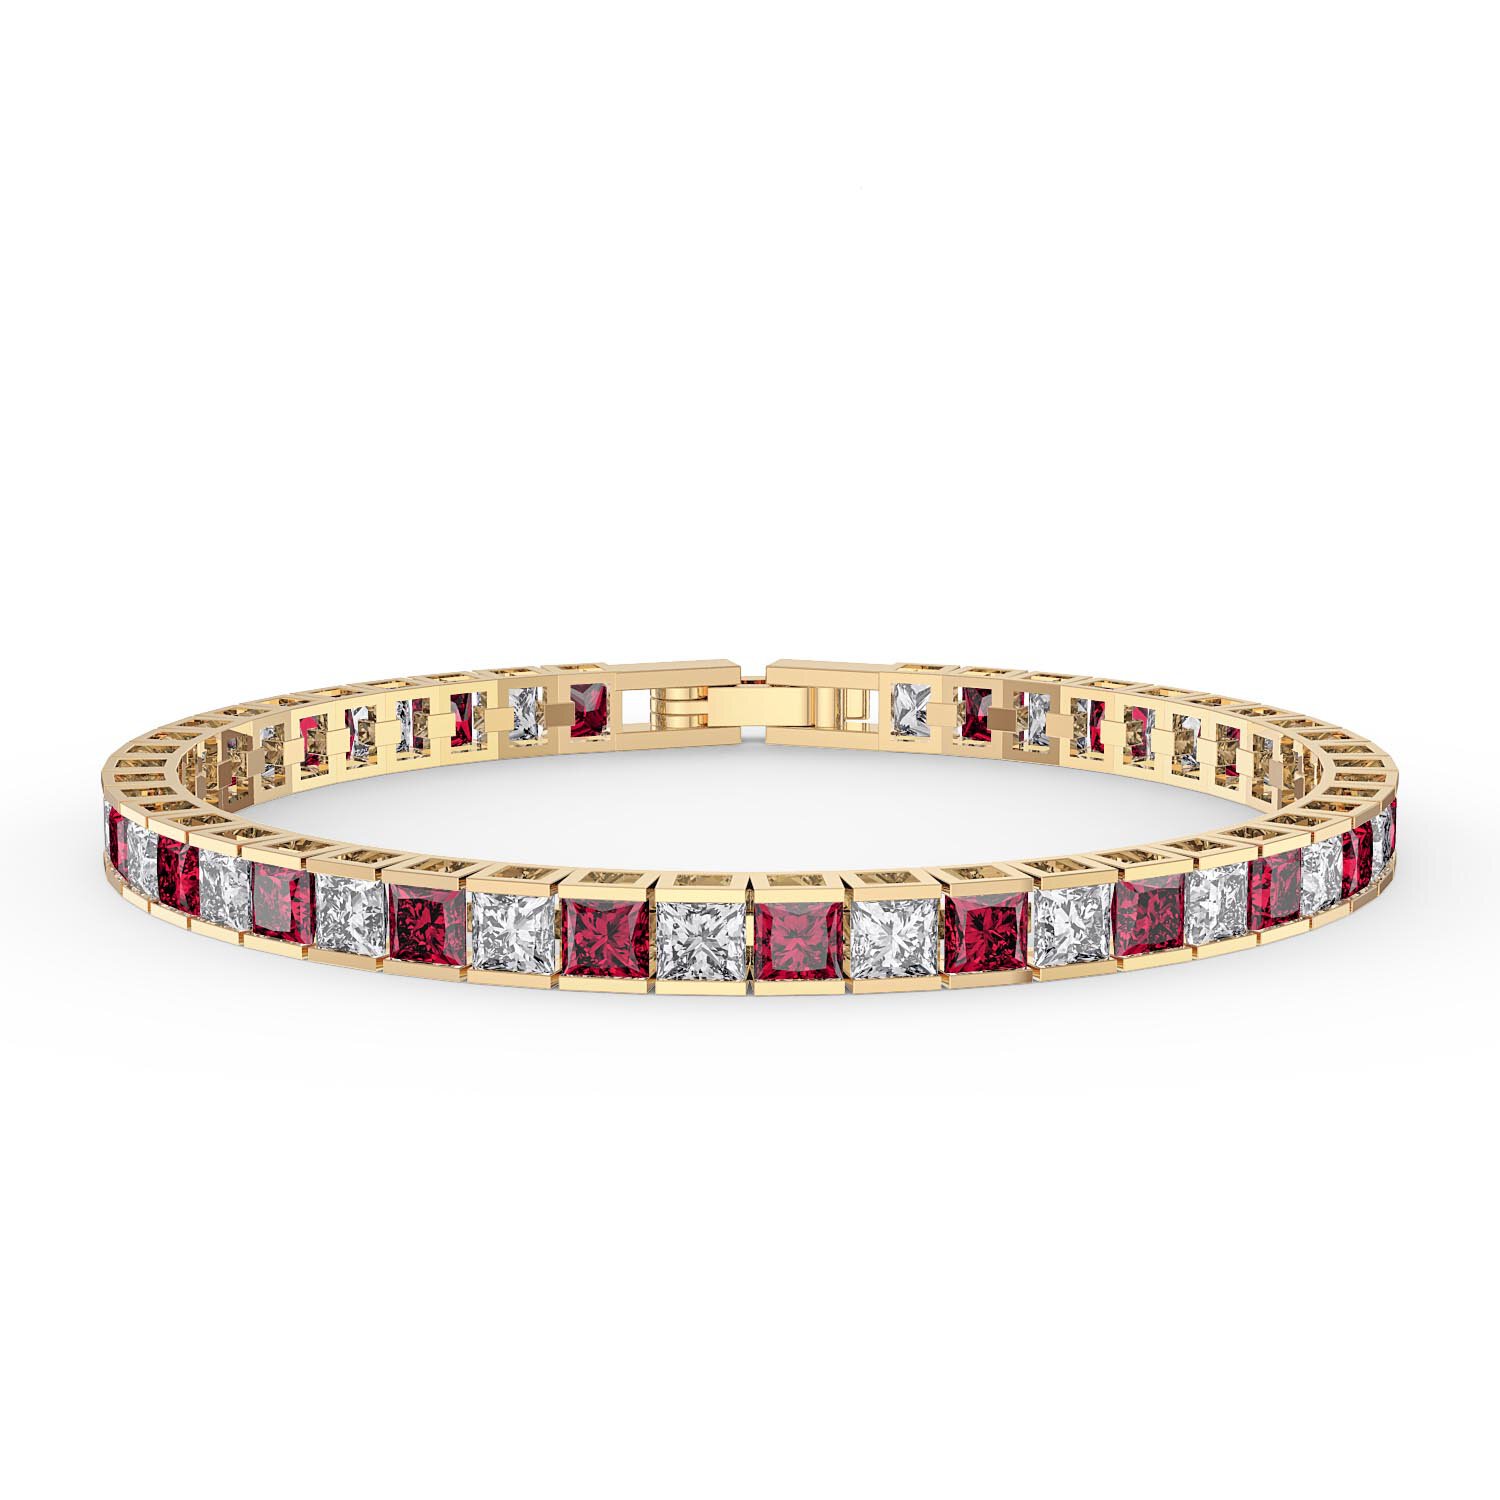 Geometric 18k Gold Chain Bracelet With Ruby Charm Link Chain  Etsy  Gold  bracelet chain Jewelry bracelets gold 18k gold chain